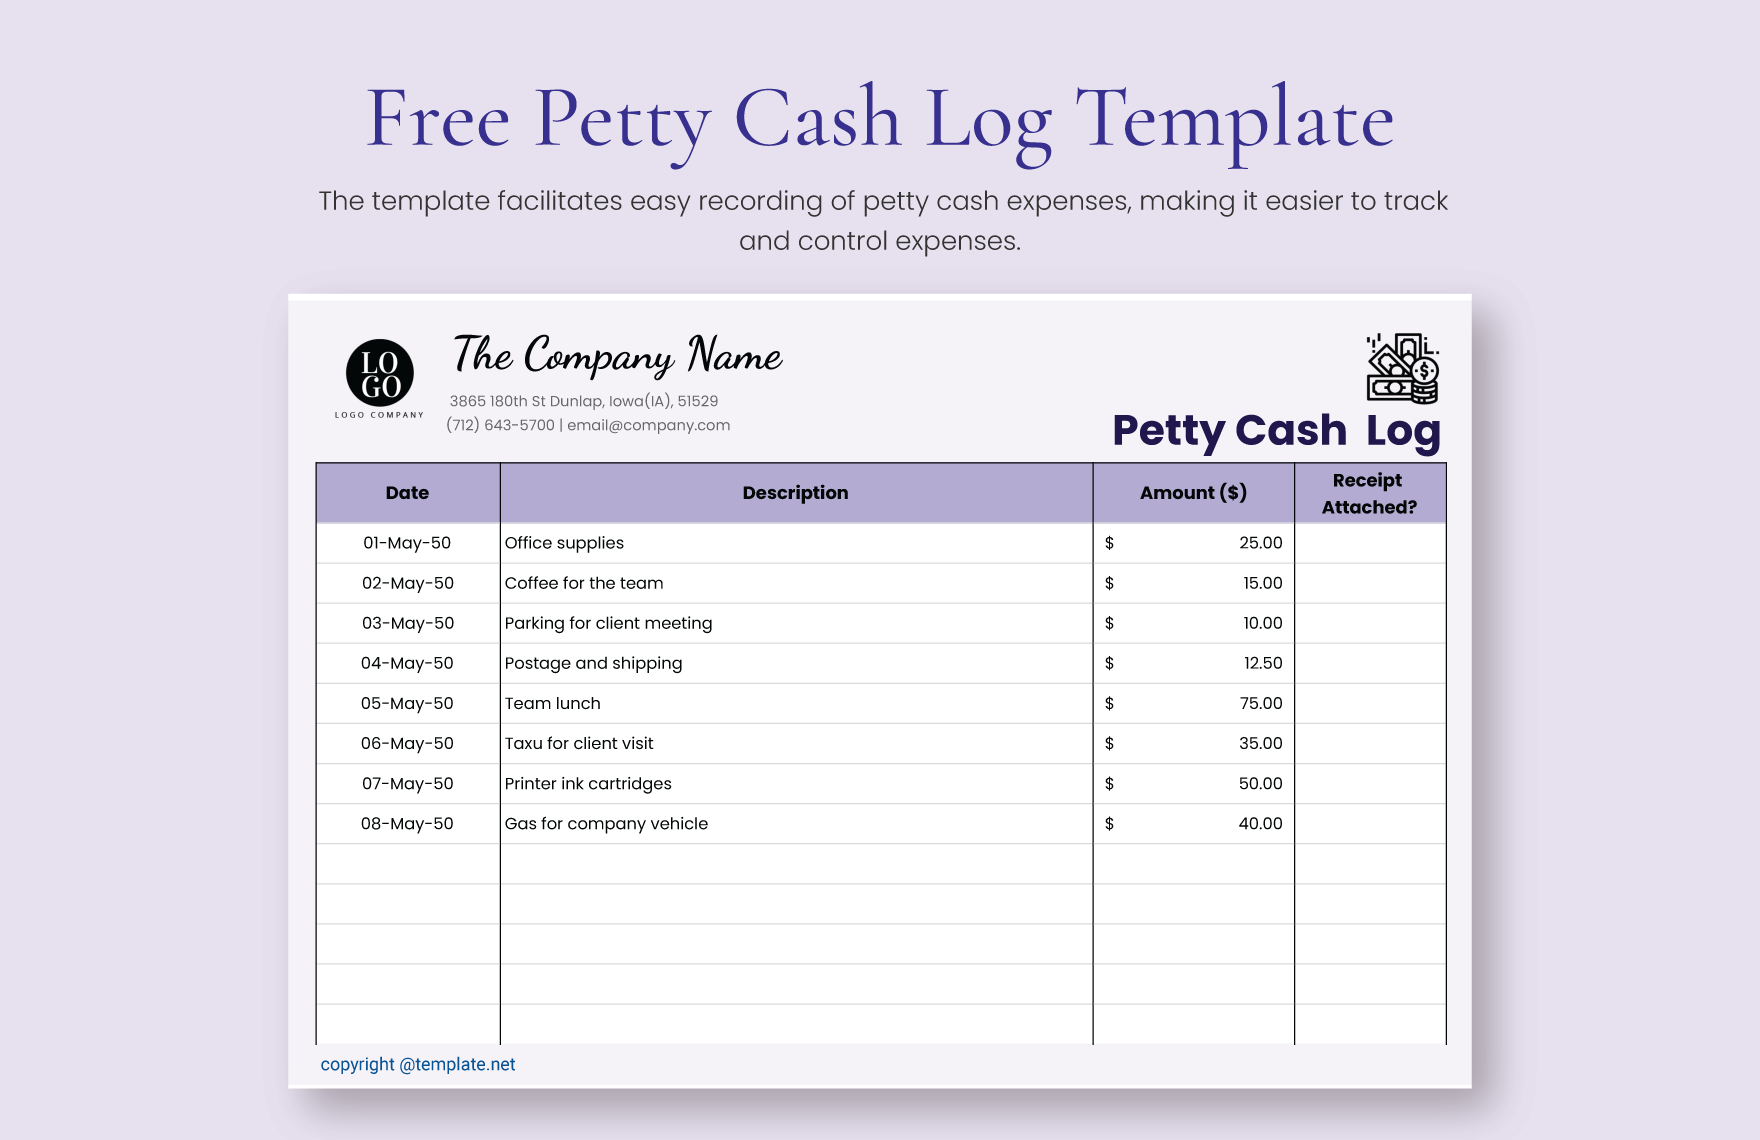 Free Petty Cash Log Template